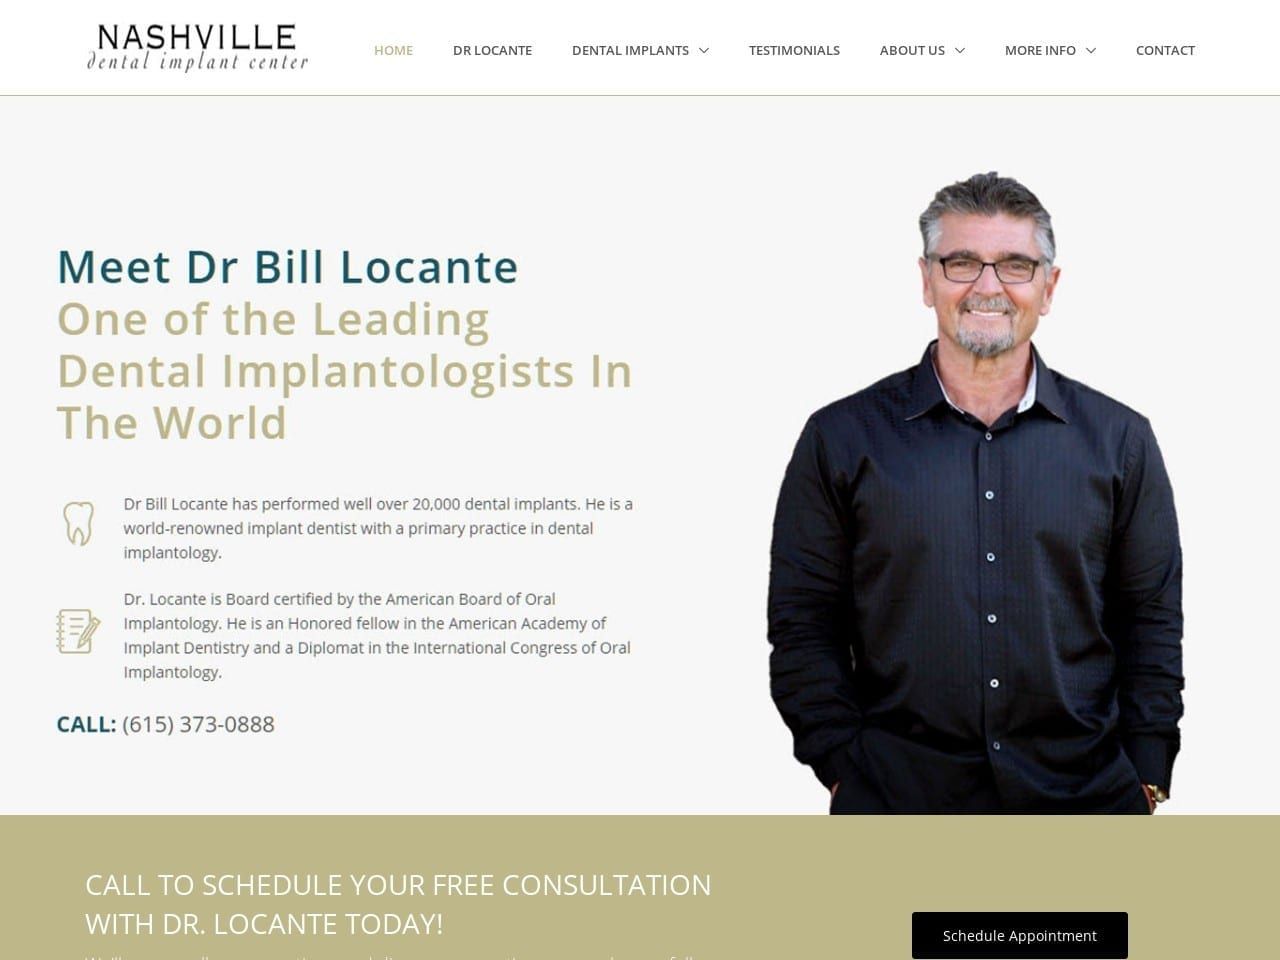 Nashville Dental Implant Center Website Screenshot from implantdentistnashville.com